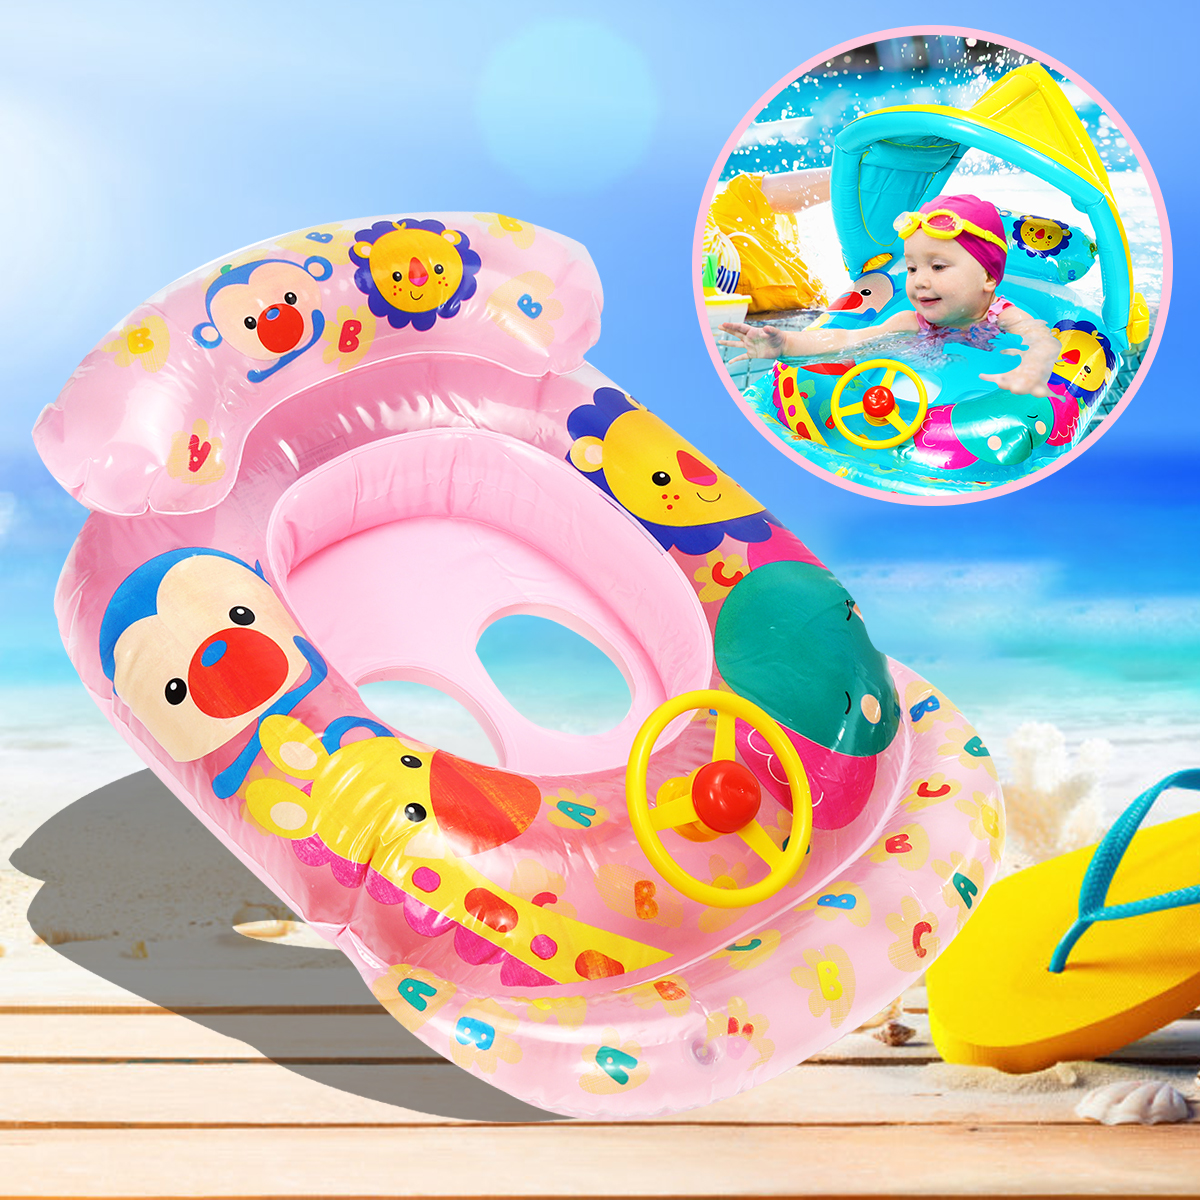 Inflatable-Sunshade-Kids-Float-Seat-Boat-Children-Swim-Swimming-Ring-Pool-Water-1568945-1